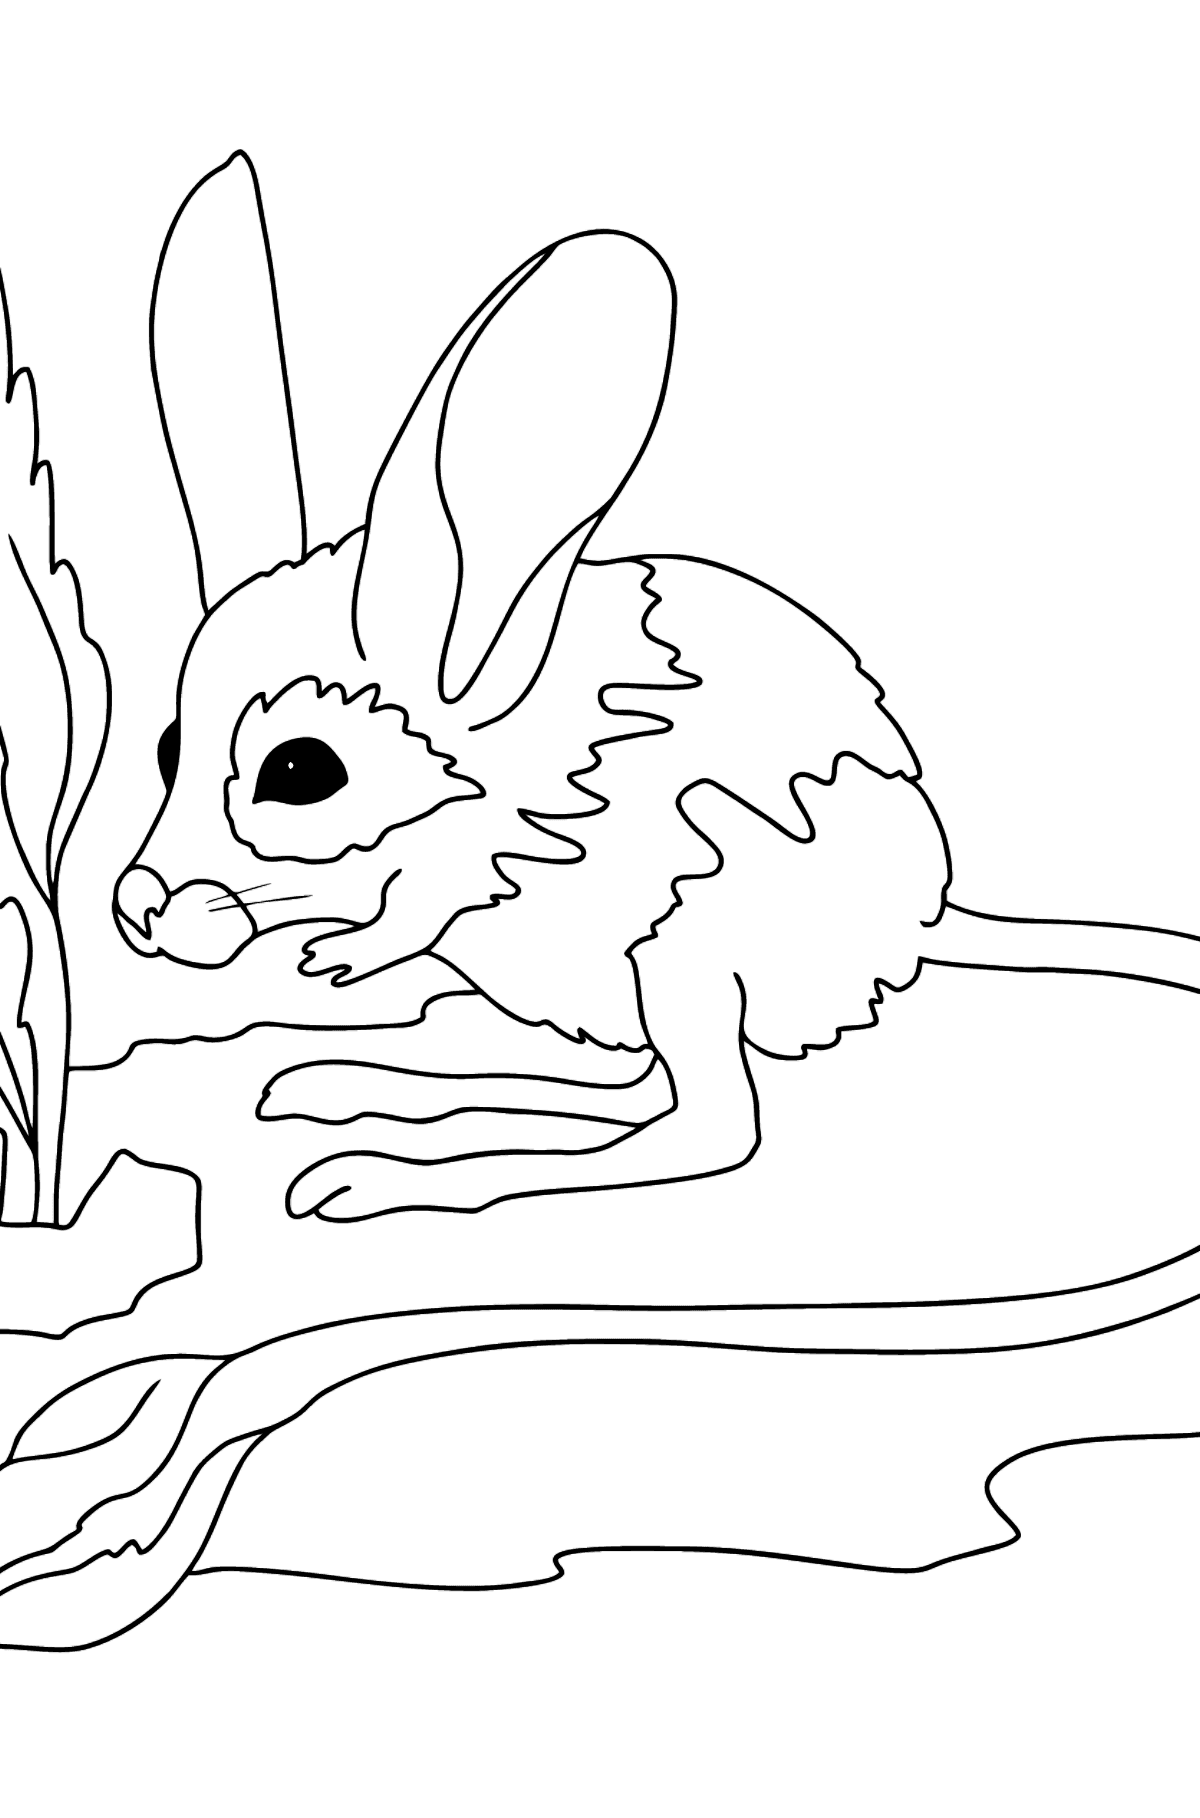 Розмальовка Земляний заєць - Розмальовки для дітей